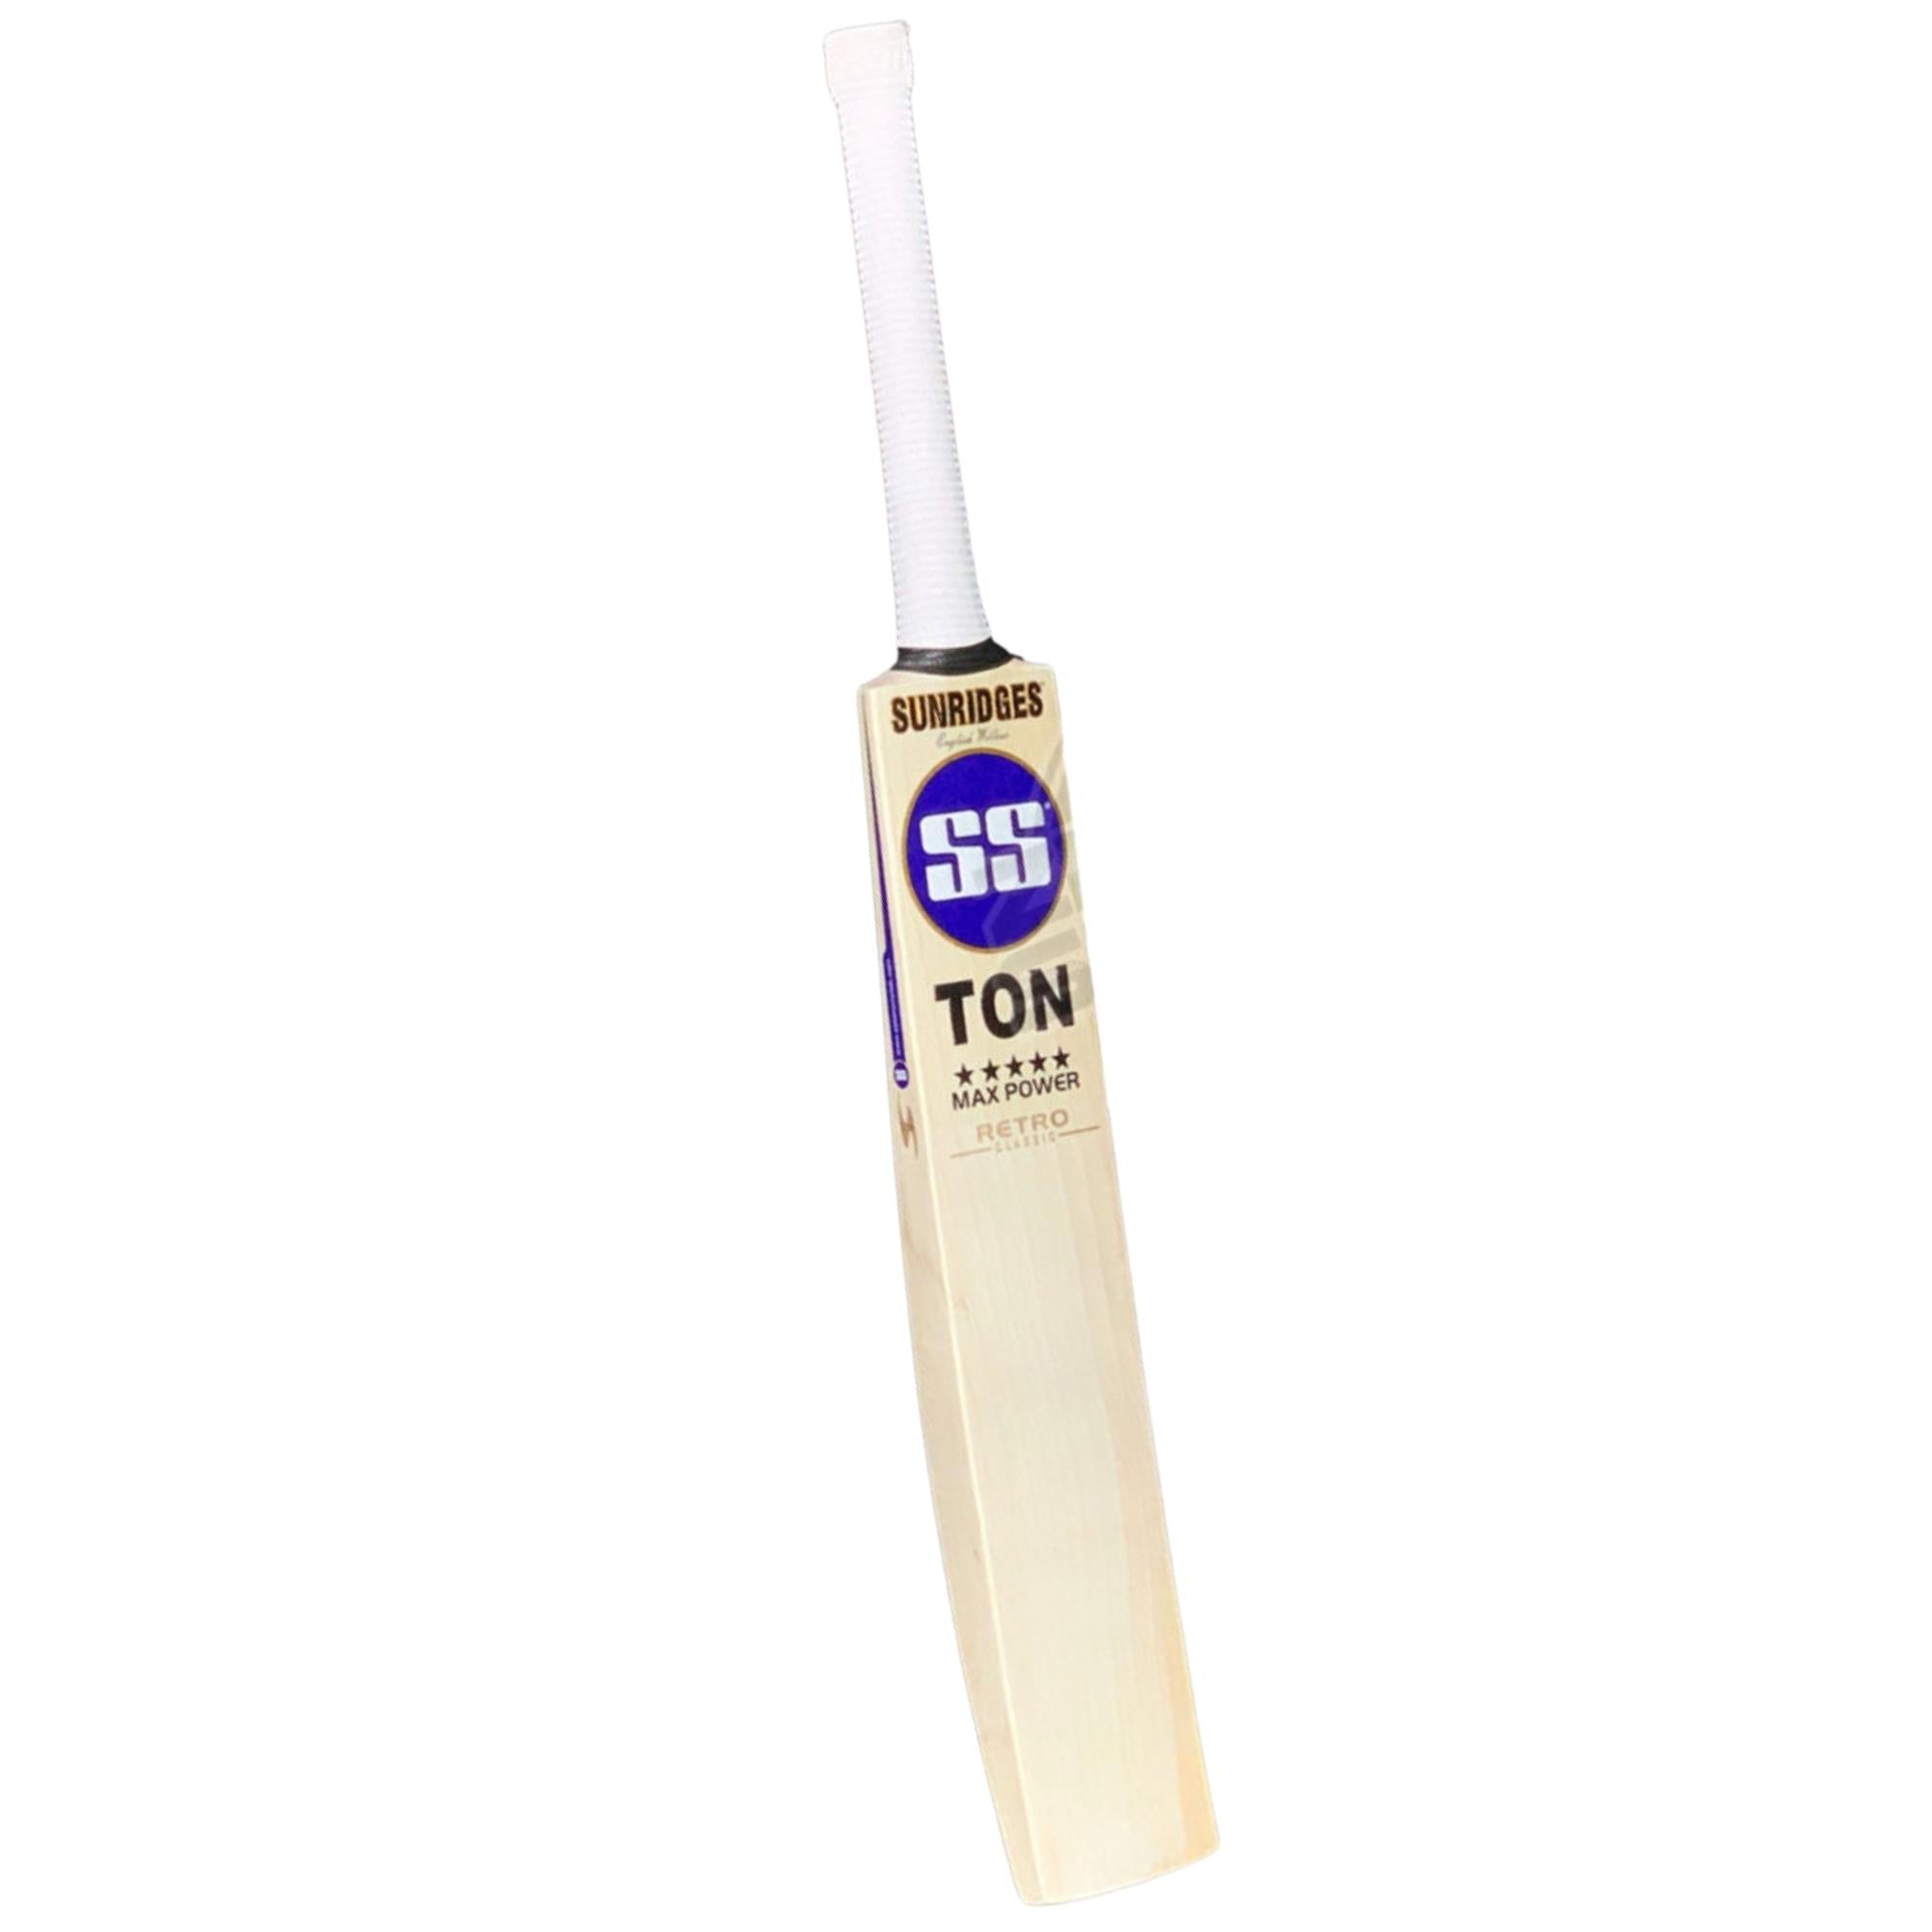 SS Ton Sunridges Max Power Retro Classic Cricket Bat